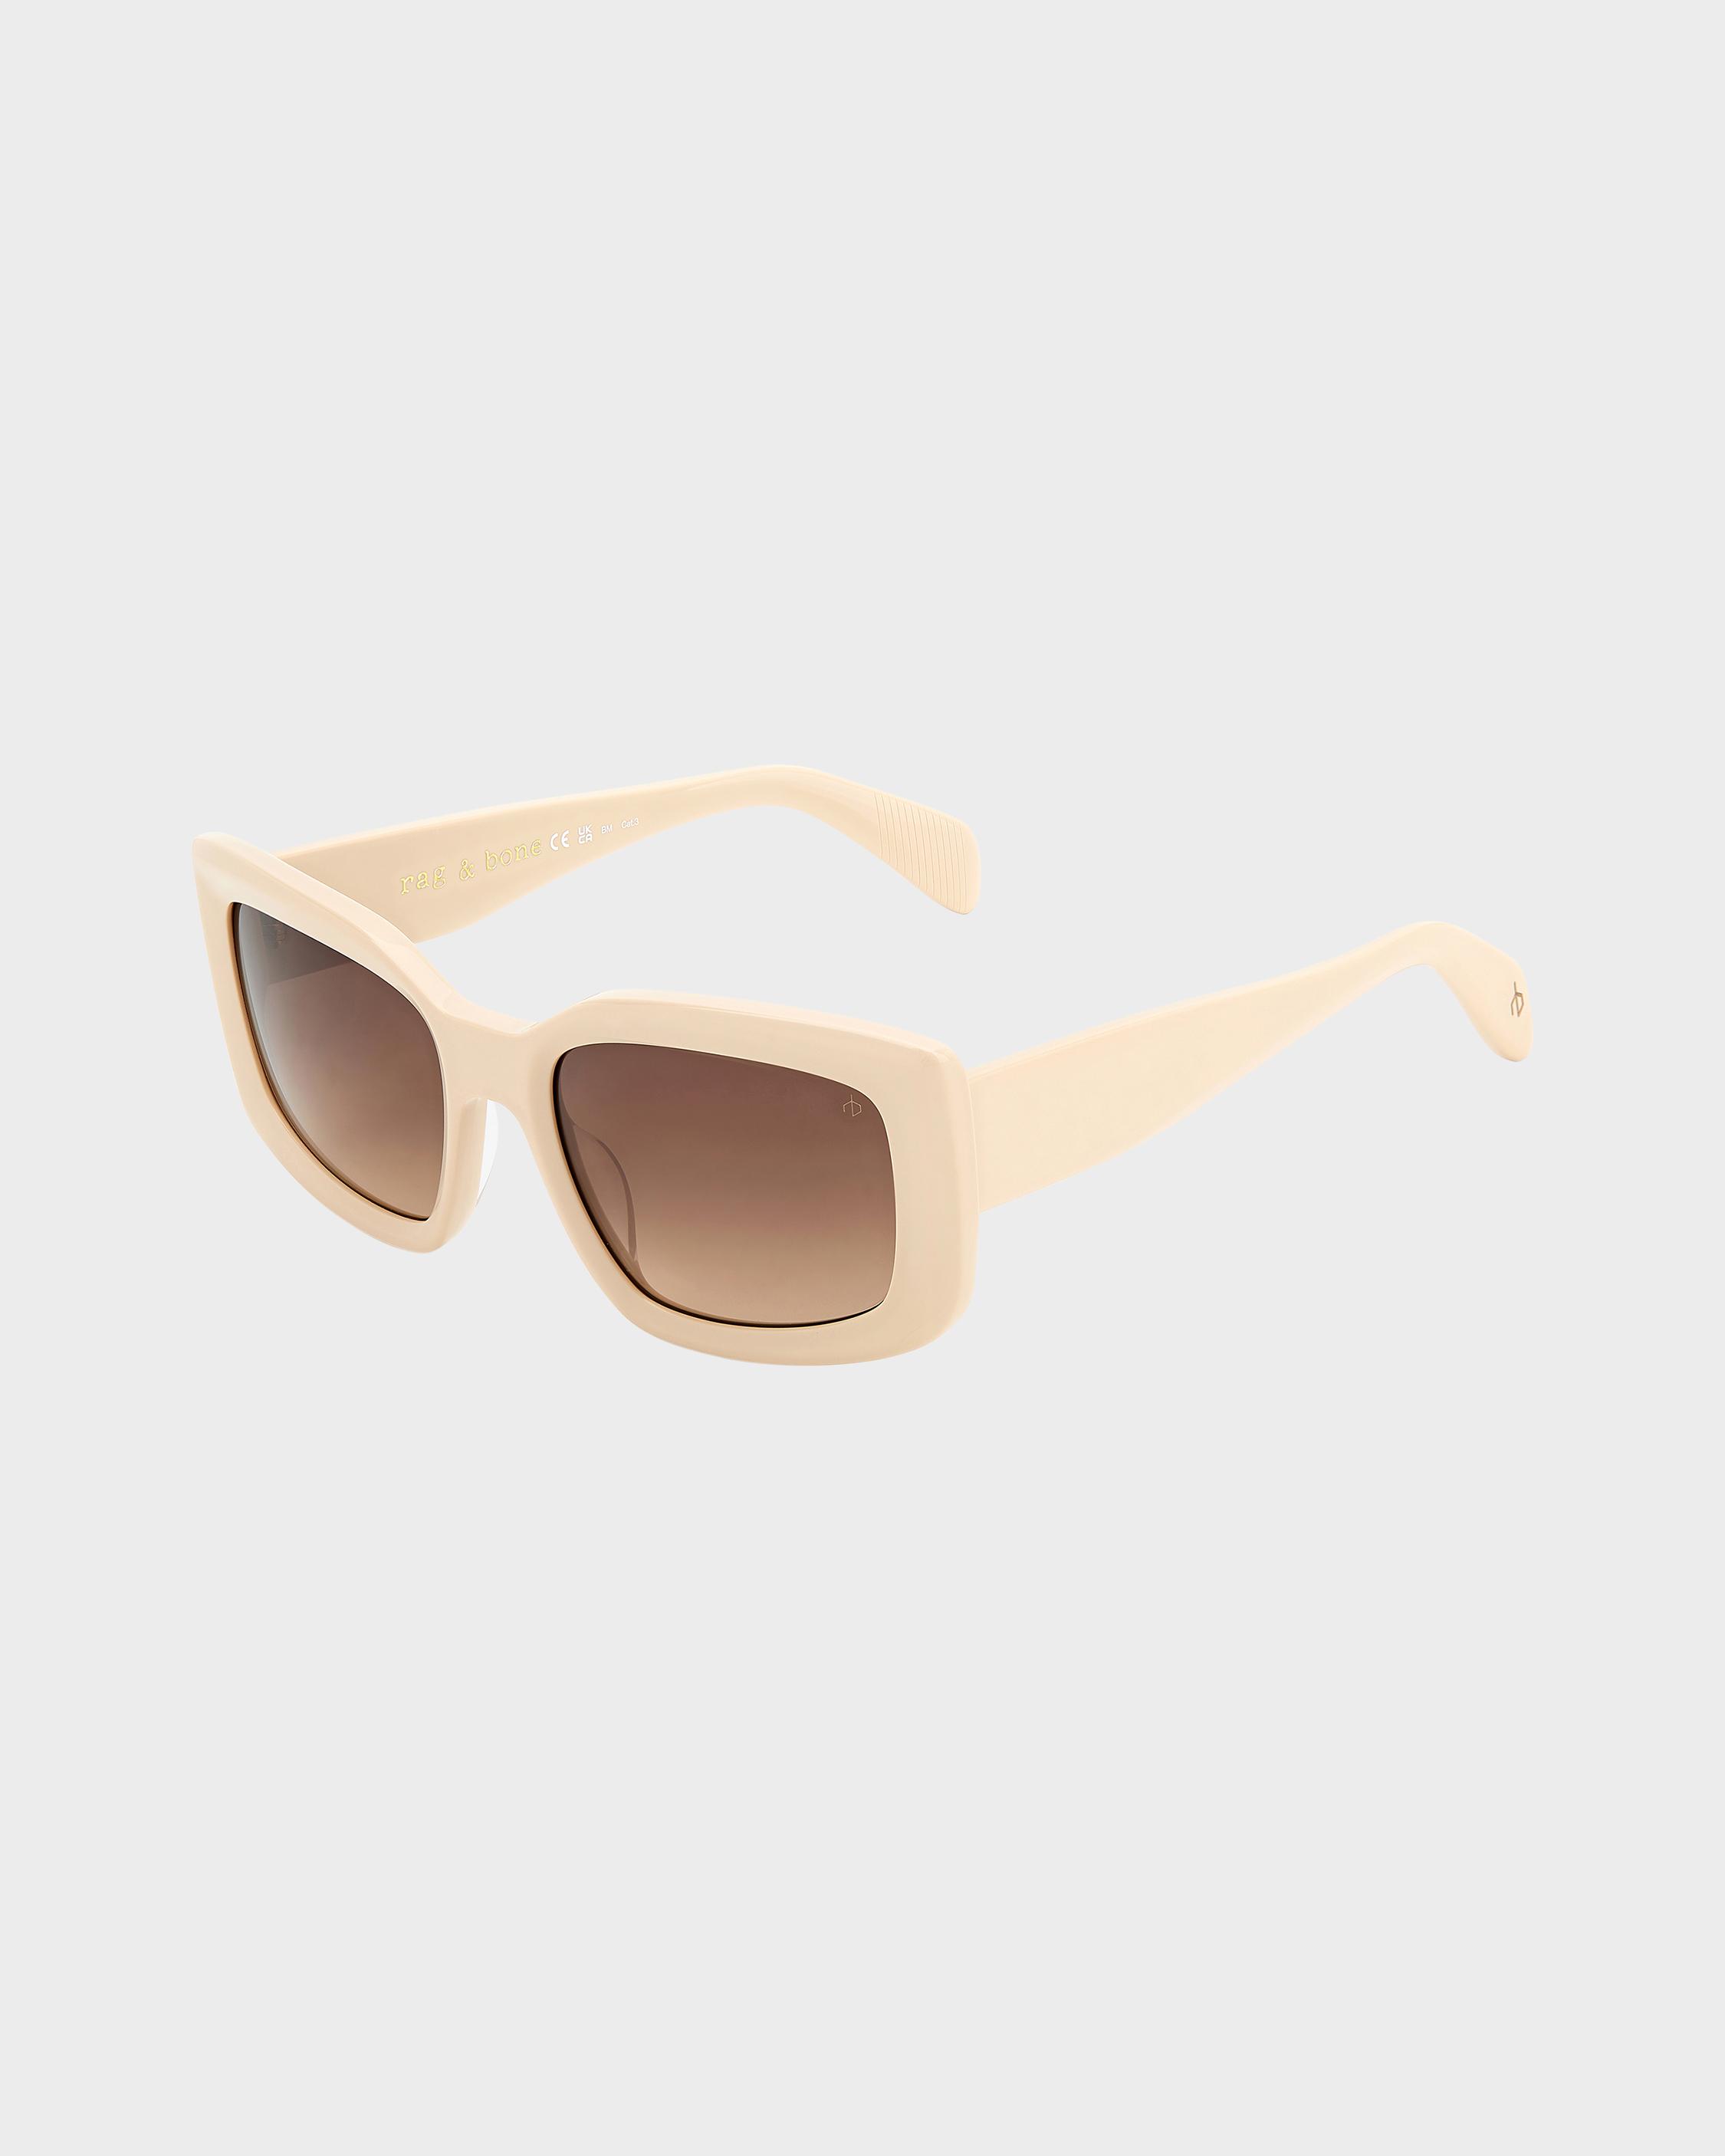 Shop Sunglasses for Women | rag & bone